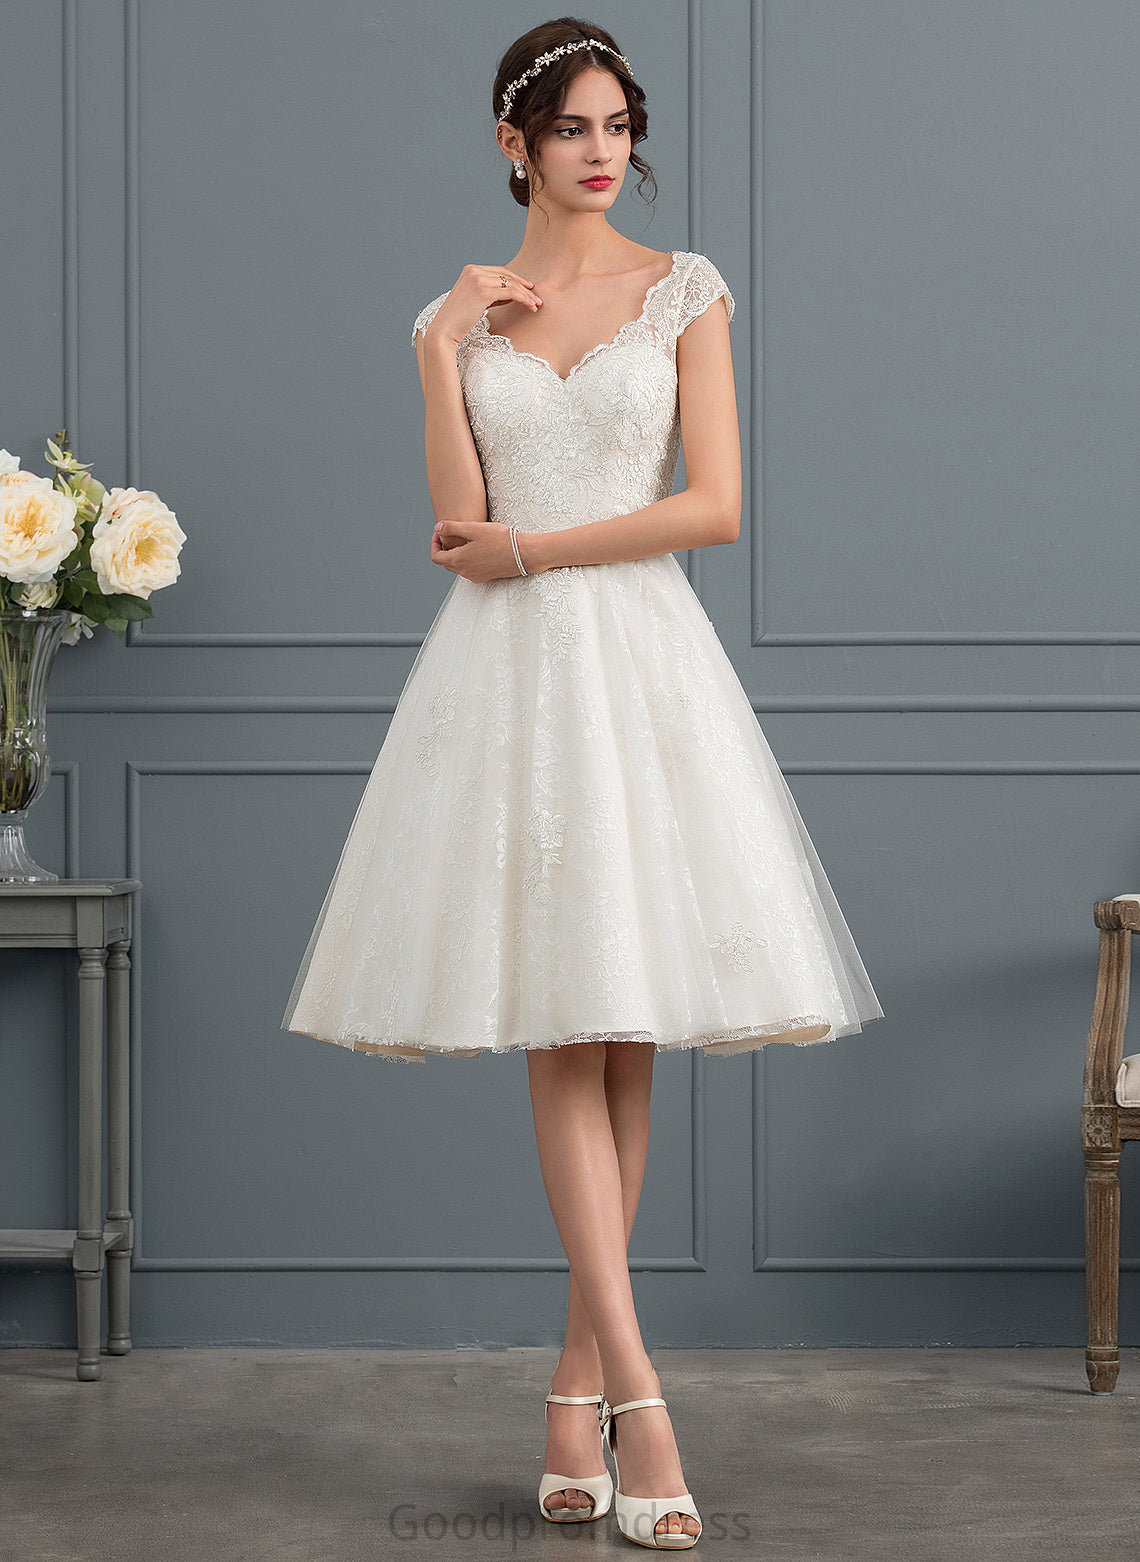 Knee-Length Lace Wedding Wedding Dresses V-neck Dress Tulle Marisa A-Line